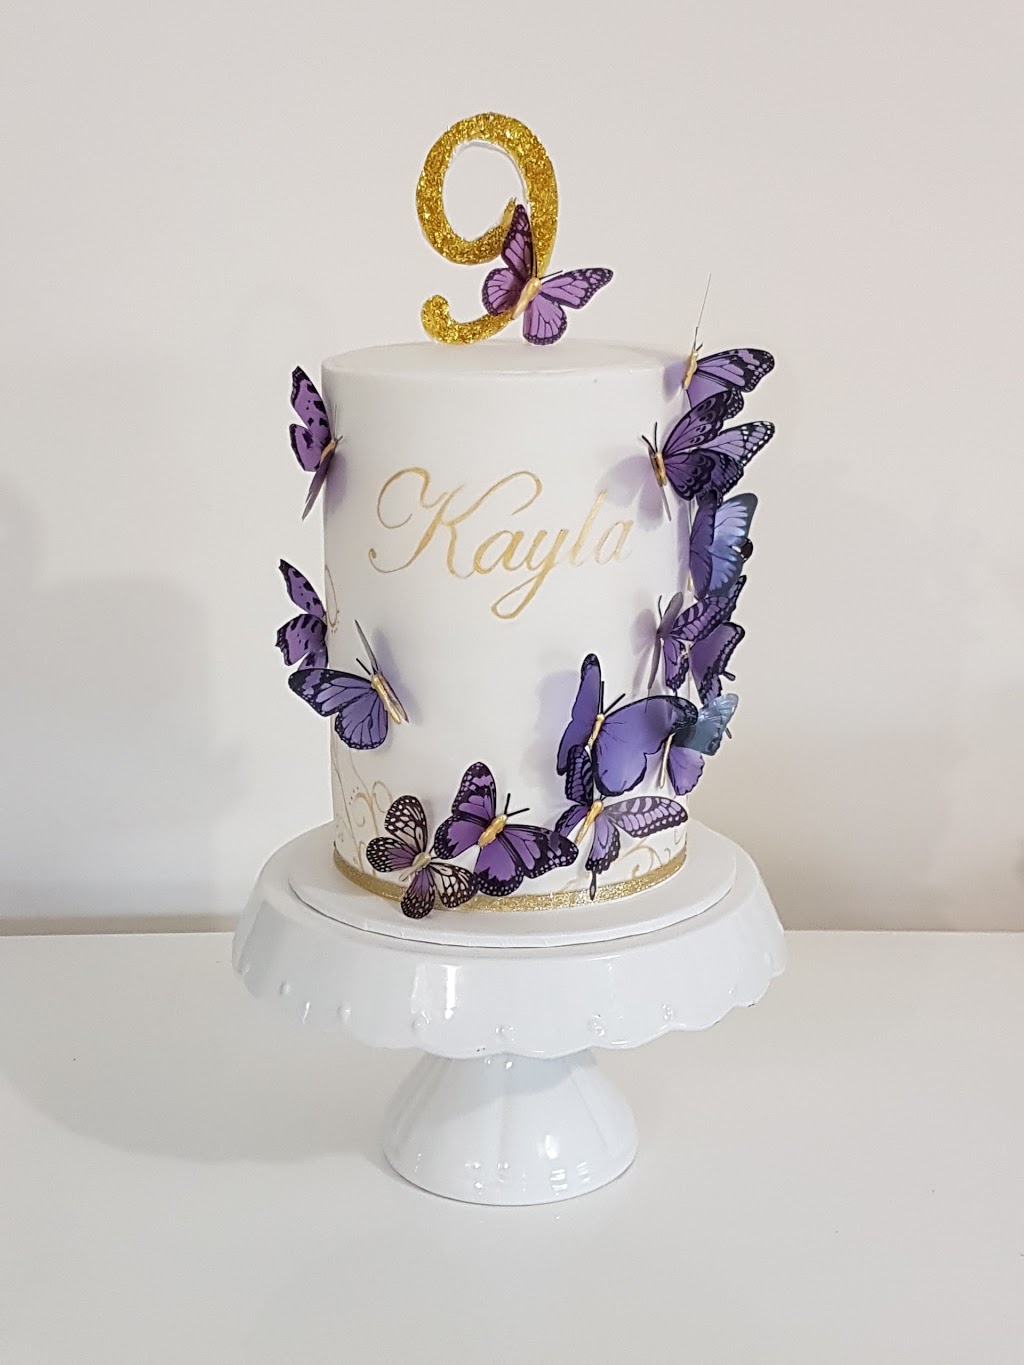 Cakes! Inspired by Kayla | bakery | President Ave, Andrews Farm SA 5114, Australia | 0422140970 OR +61 422 140 970